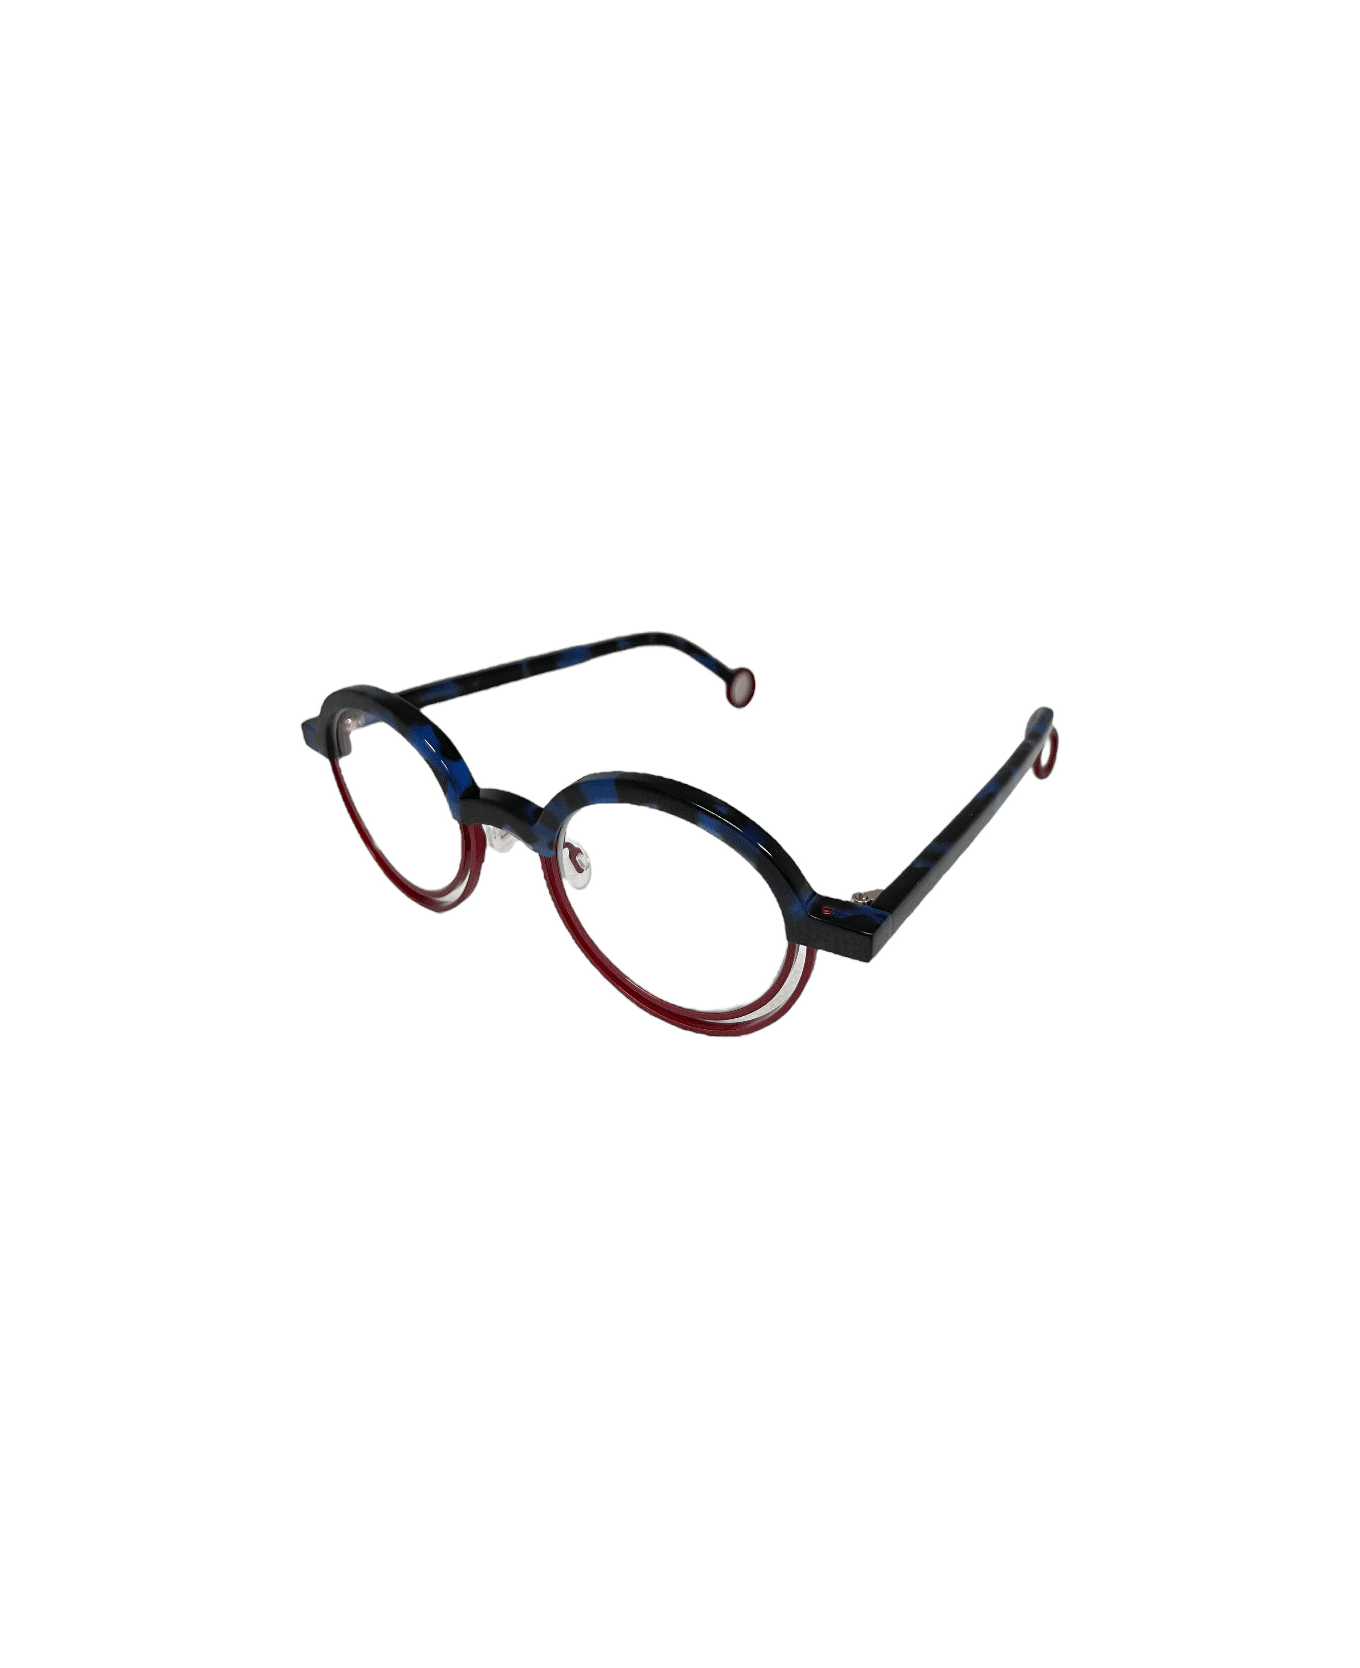 Theo Eyewear Bumper - Red & Blue Glasses アイウェア